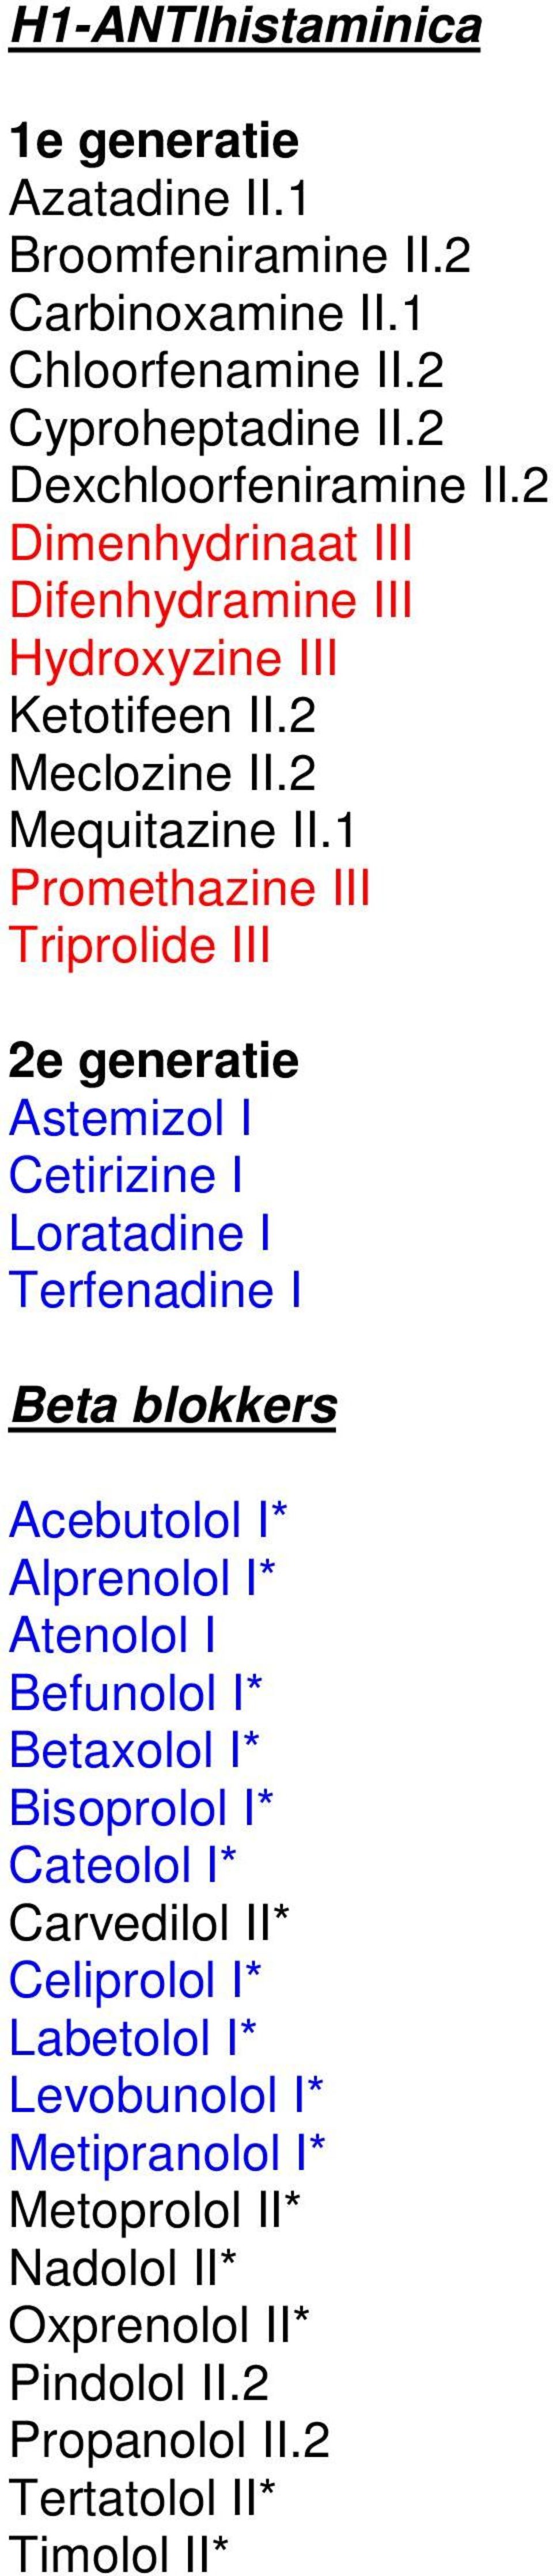 1 Promethazine III Triprolide III 2e generatie Astemizol I Cetirizine I Loratadine I Terfenadine I Beta blokkers Acebutolol I* Alprenolol I* Atenolol I